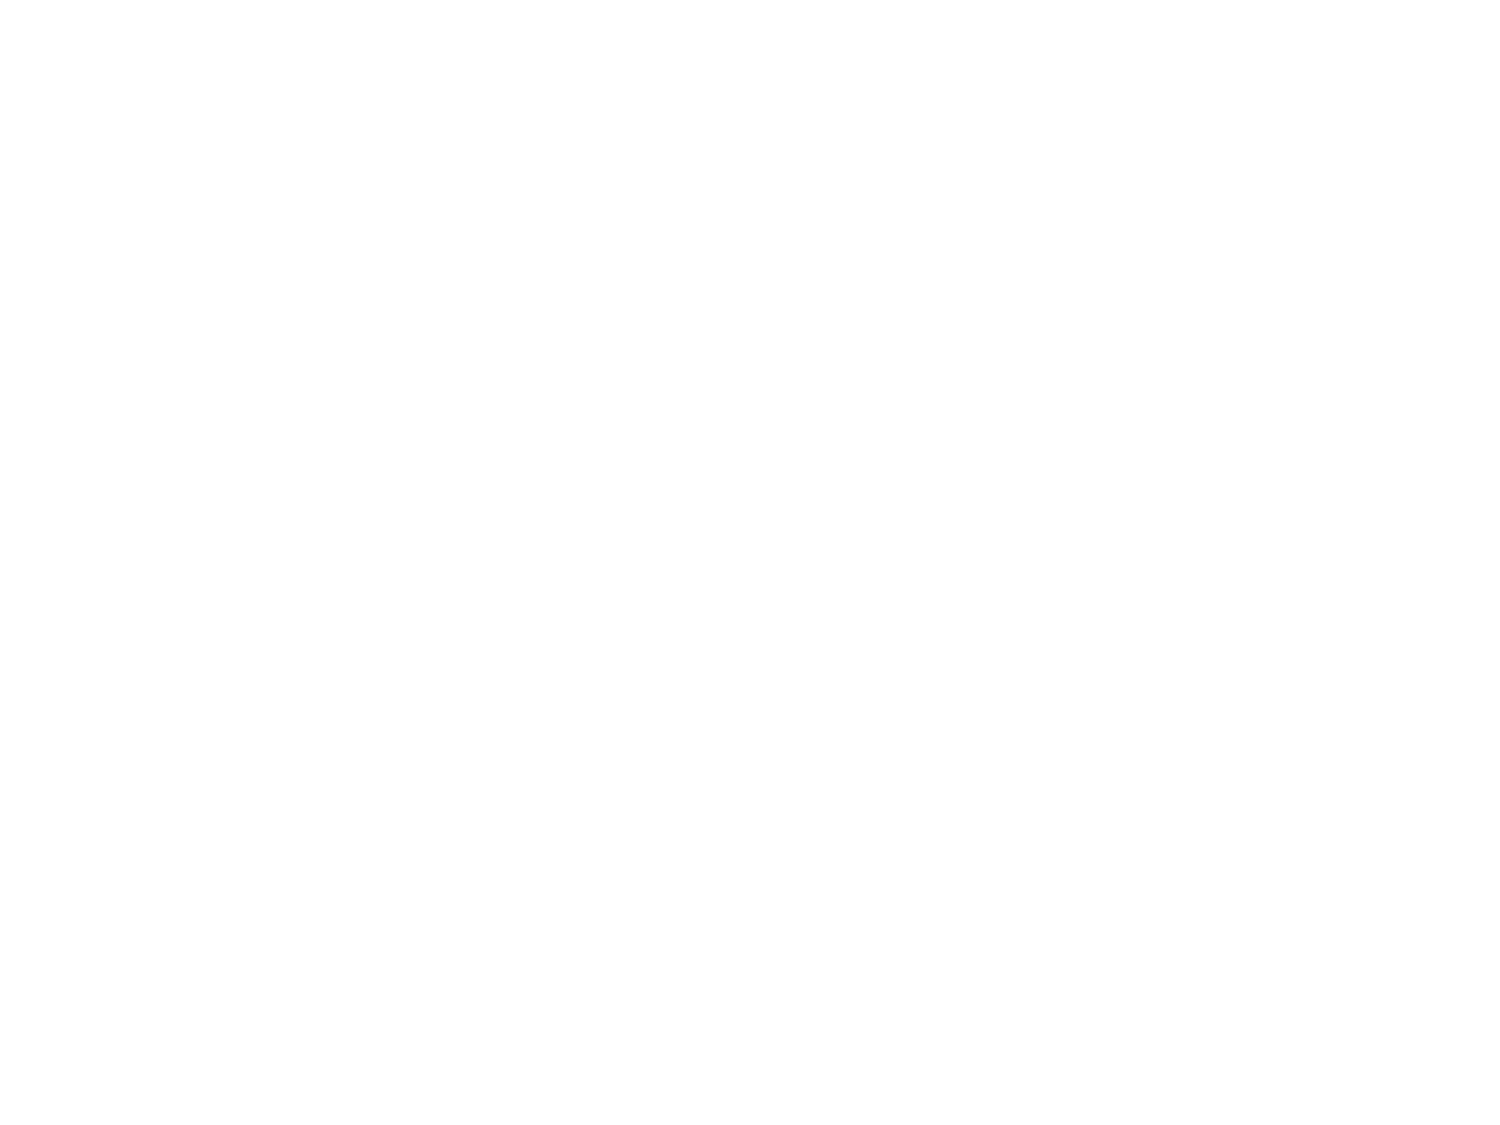 ALEXIO BOOSMAN